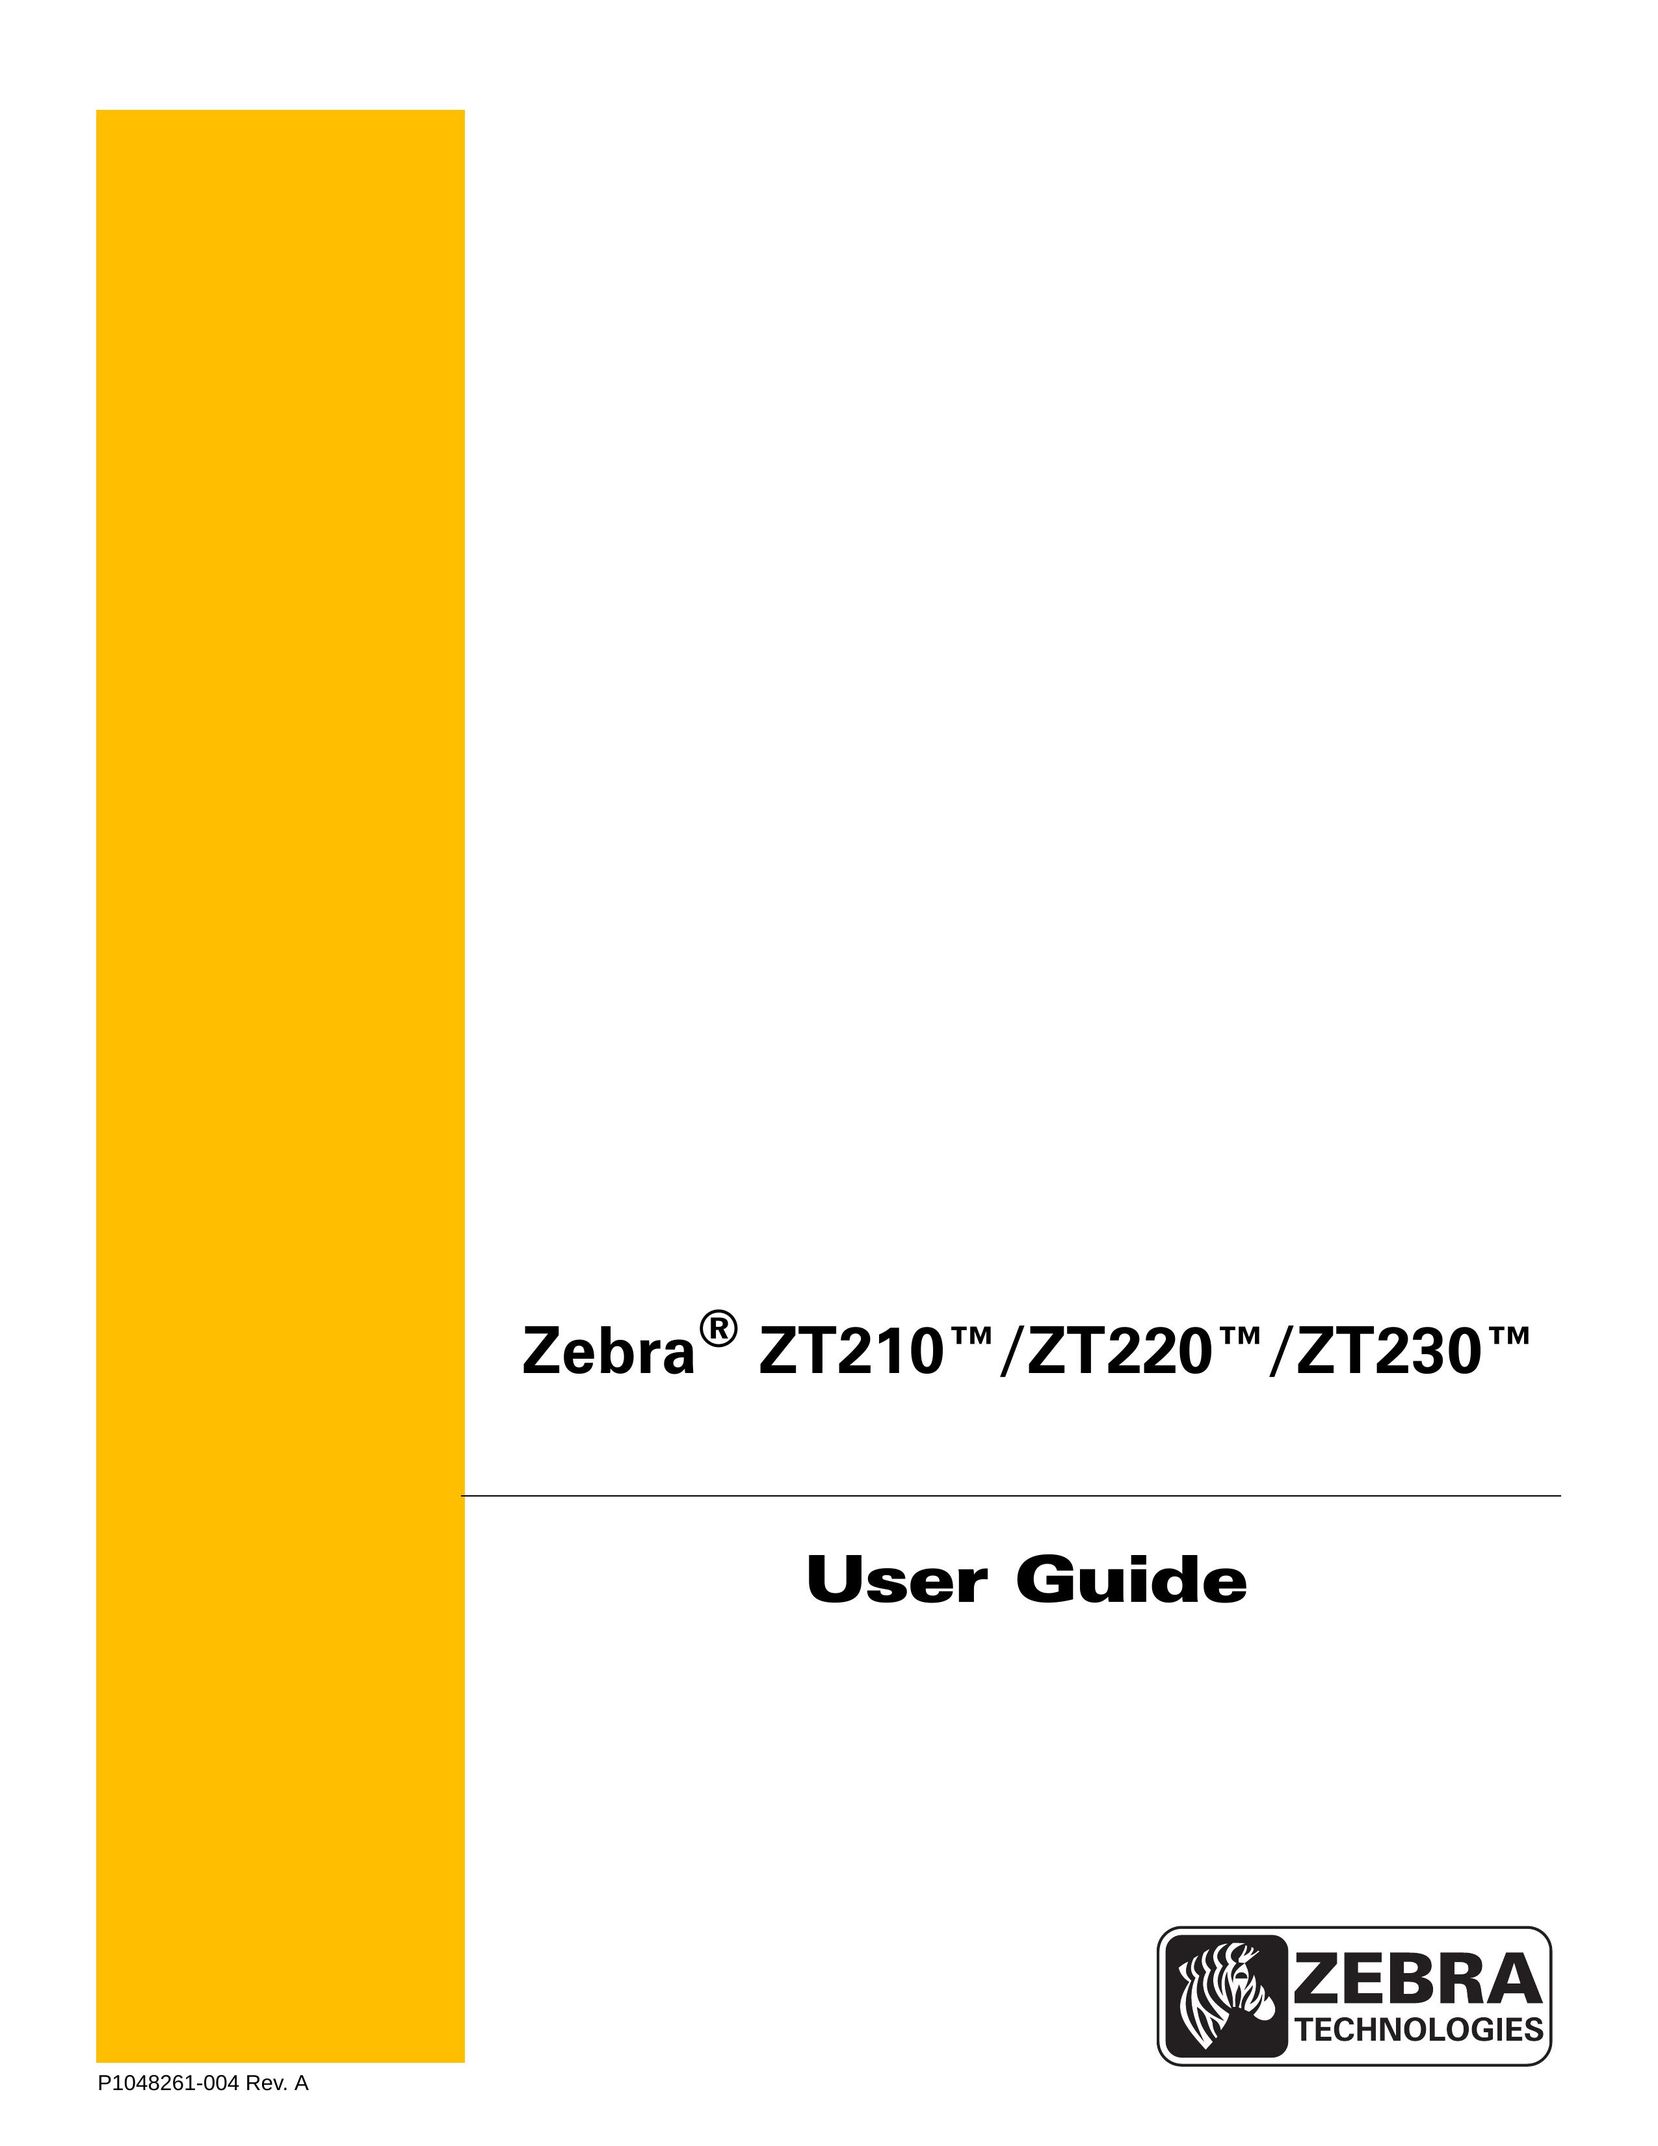 Zebra Technologies ZT210 Label Maker User Manual